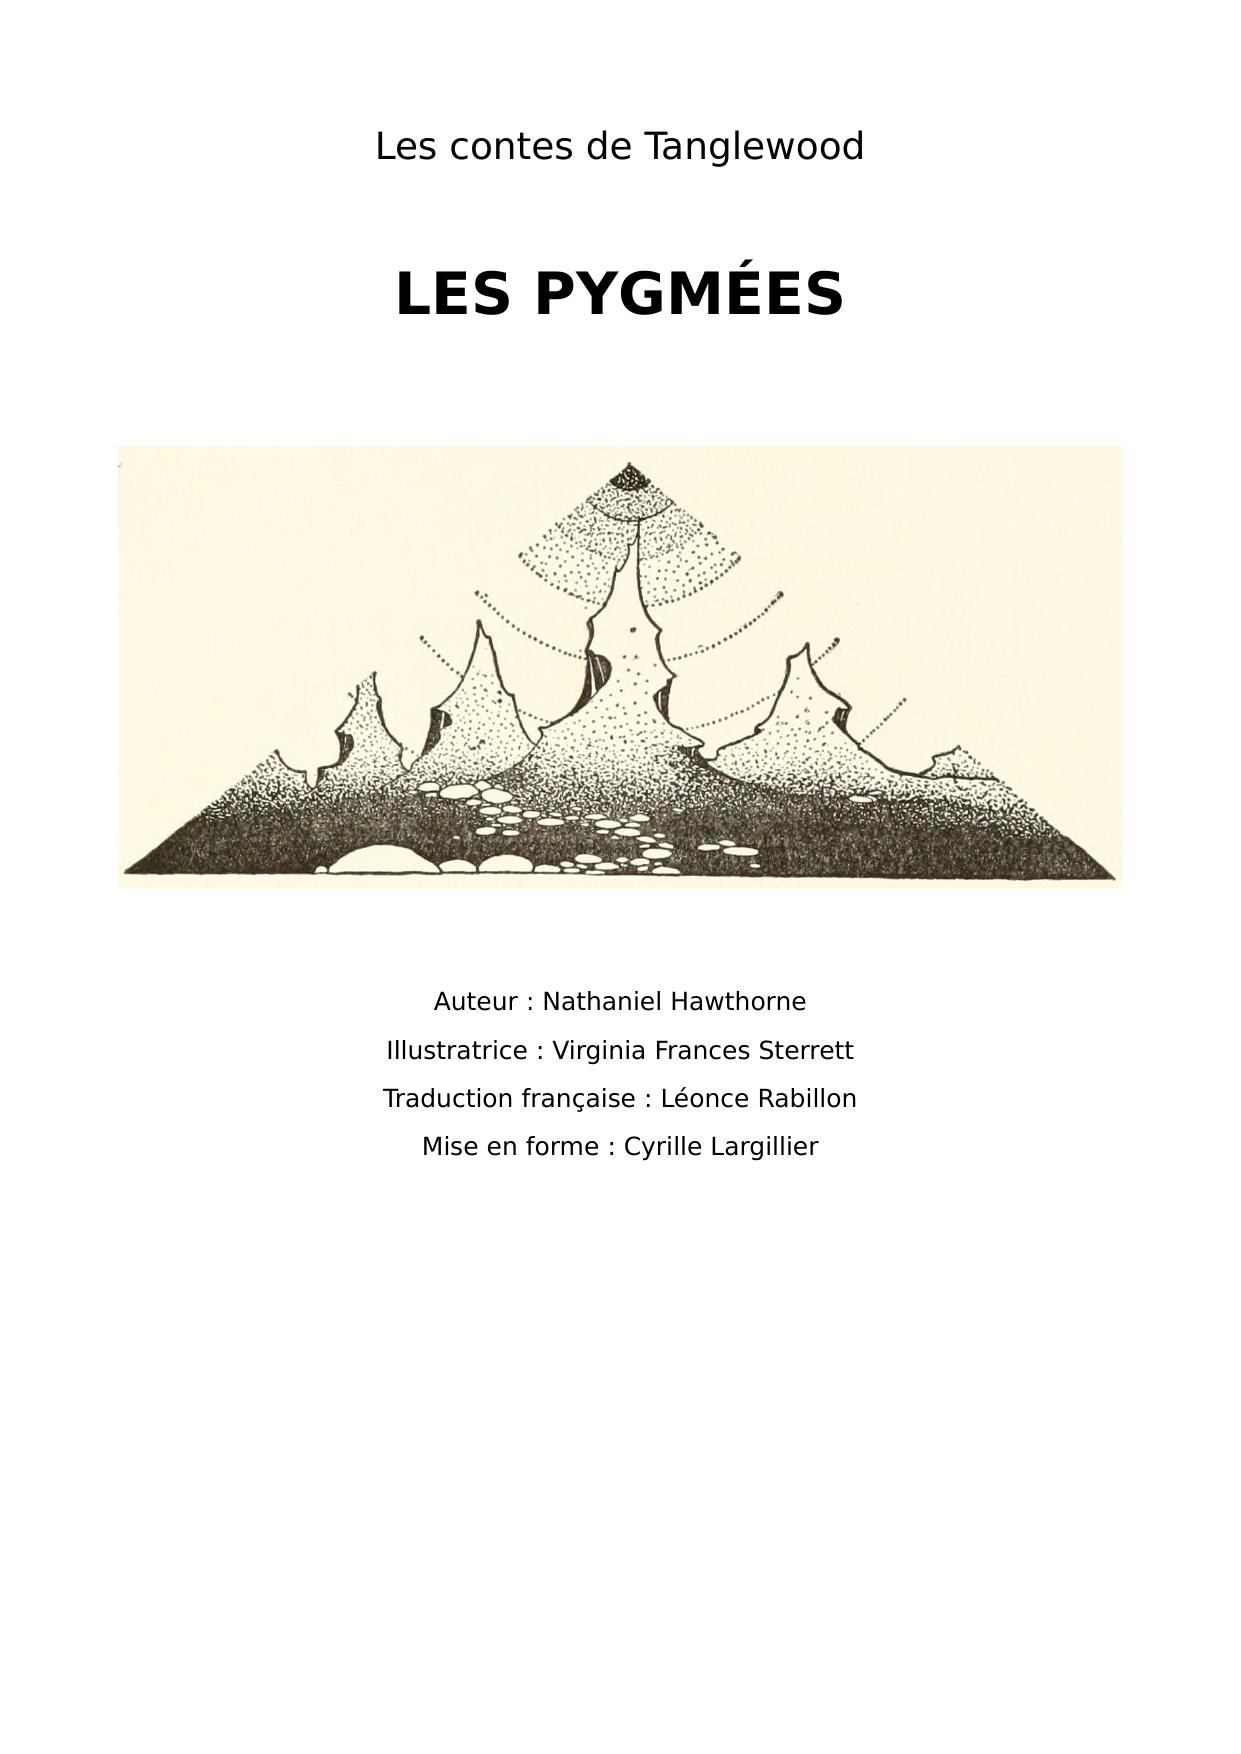 Les Pygmées